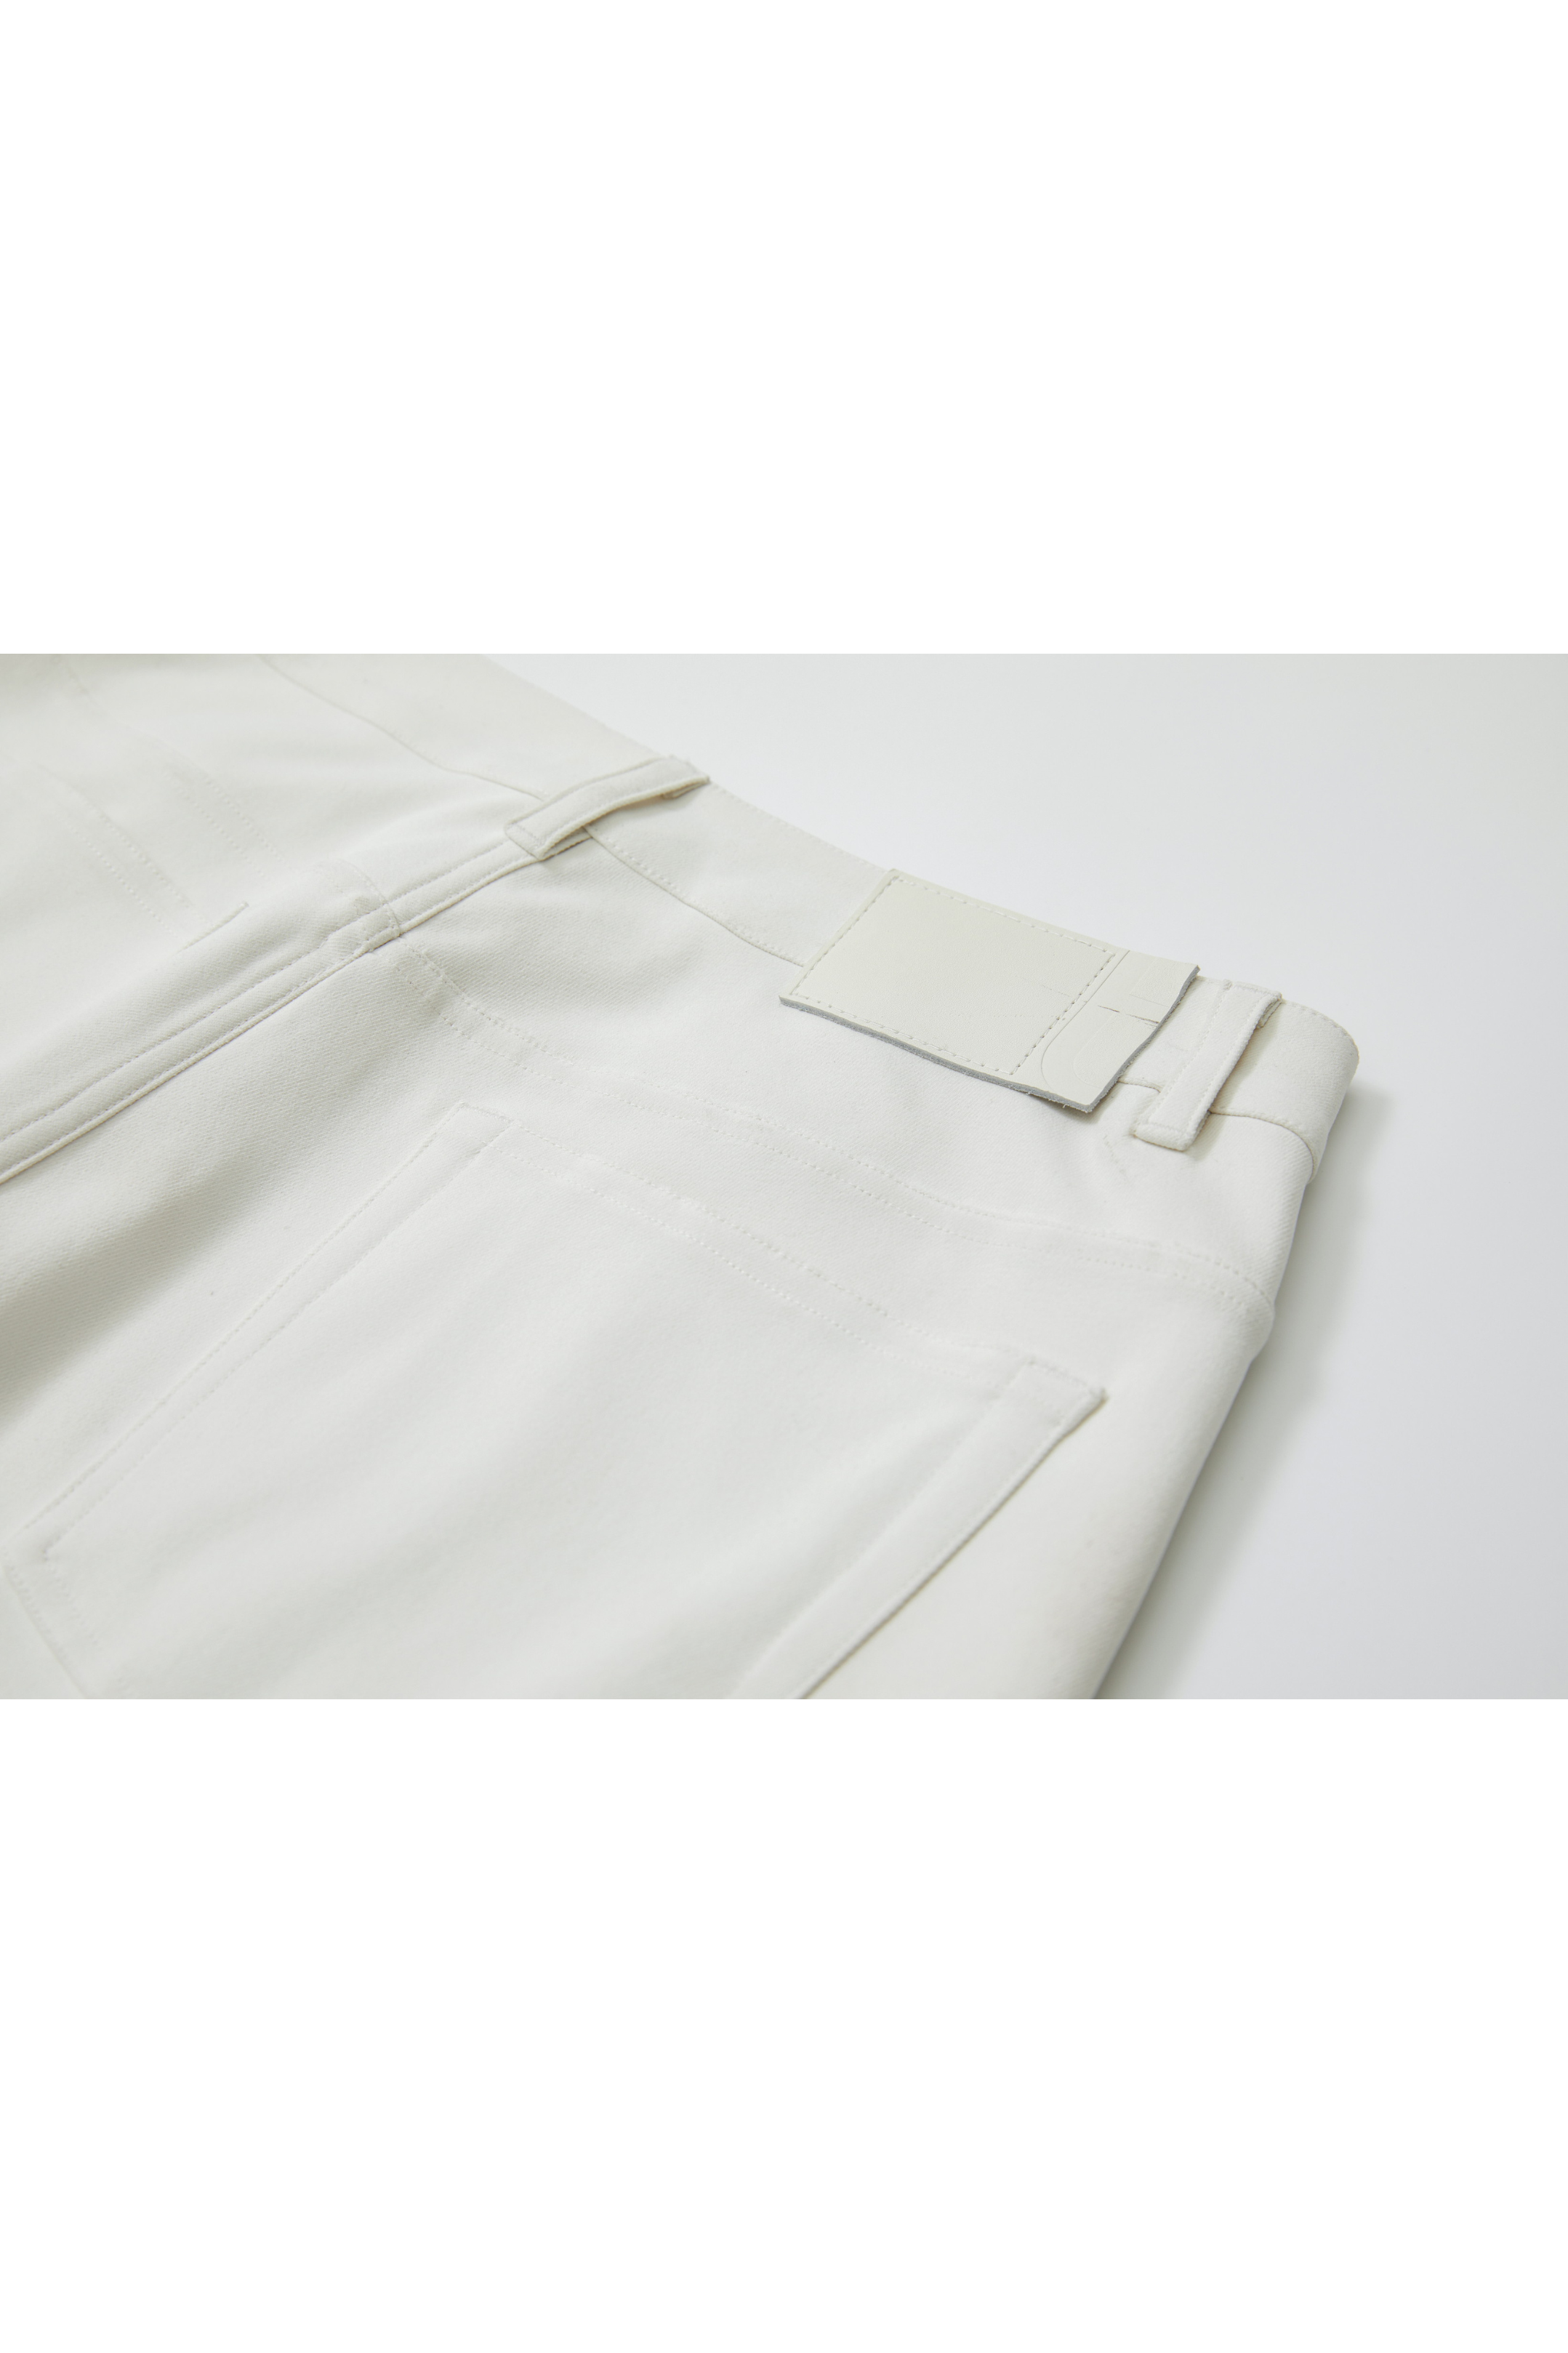 WHITE LOOSE SOFT PANTS / ホワイトルーズソフトパンツ